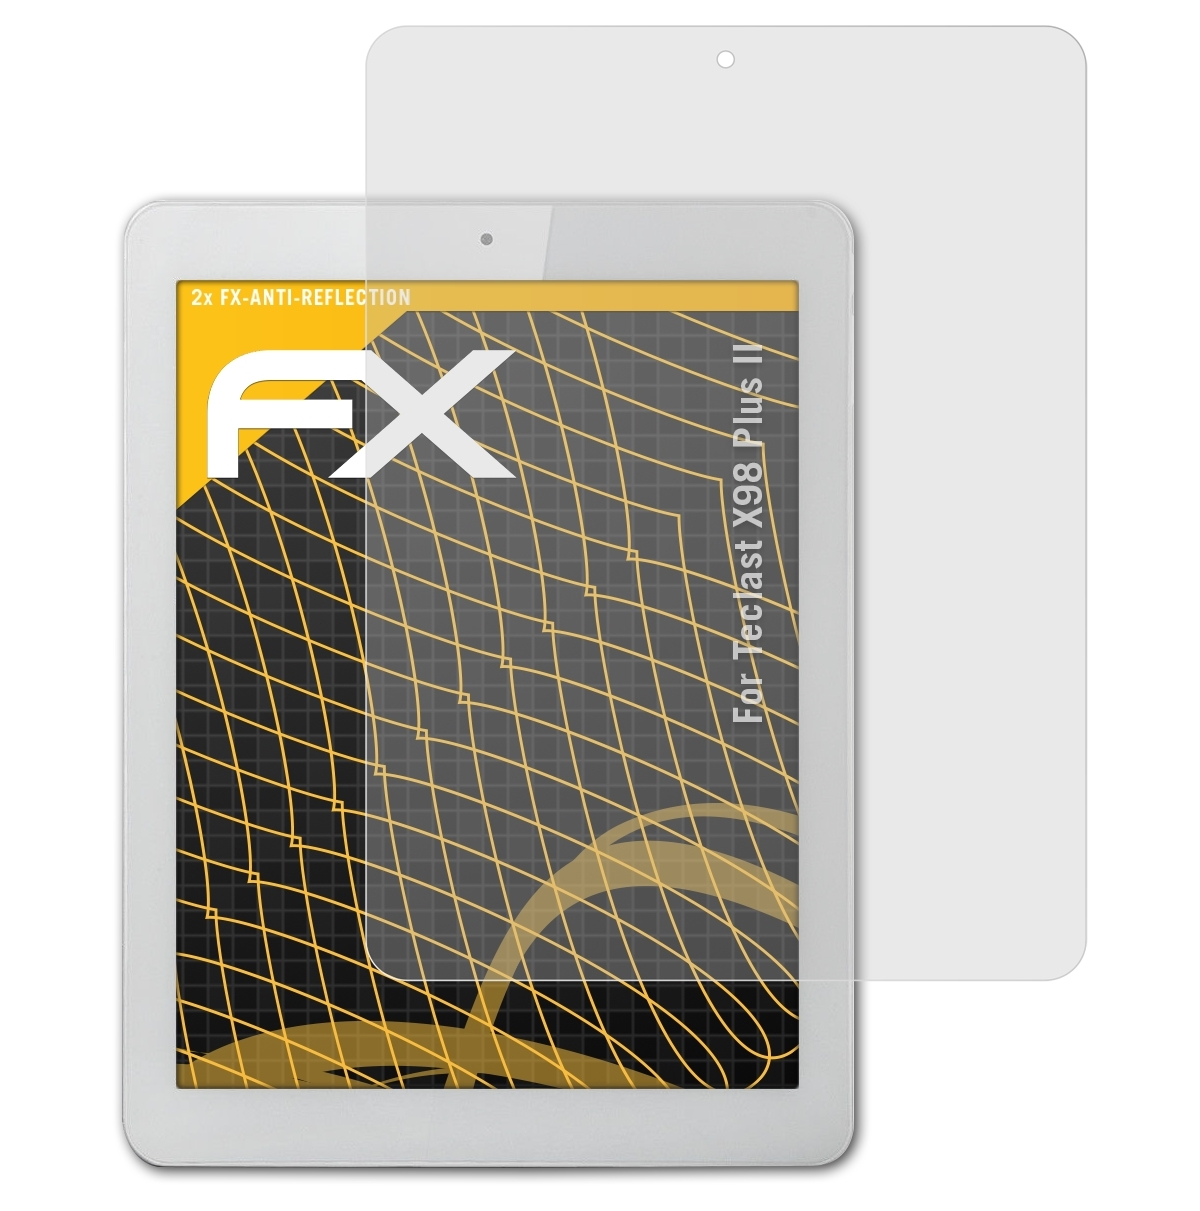 II) X98 Teclast ATFOLIX Displayschutz(für FX-Antireflex 2x Plus